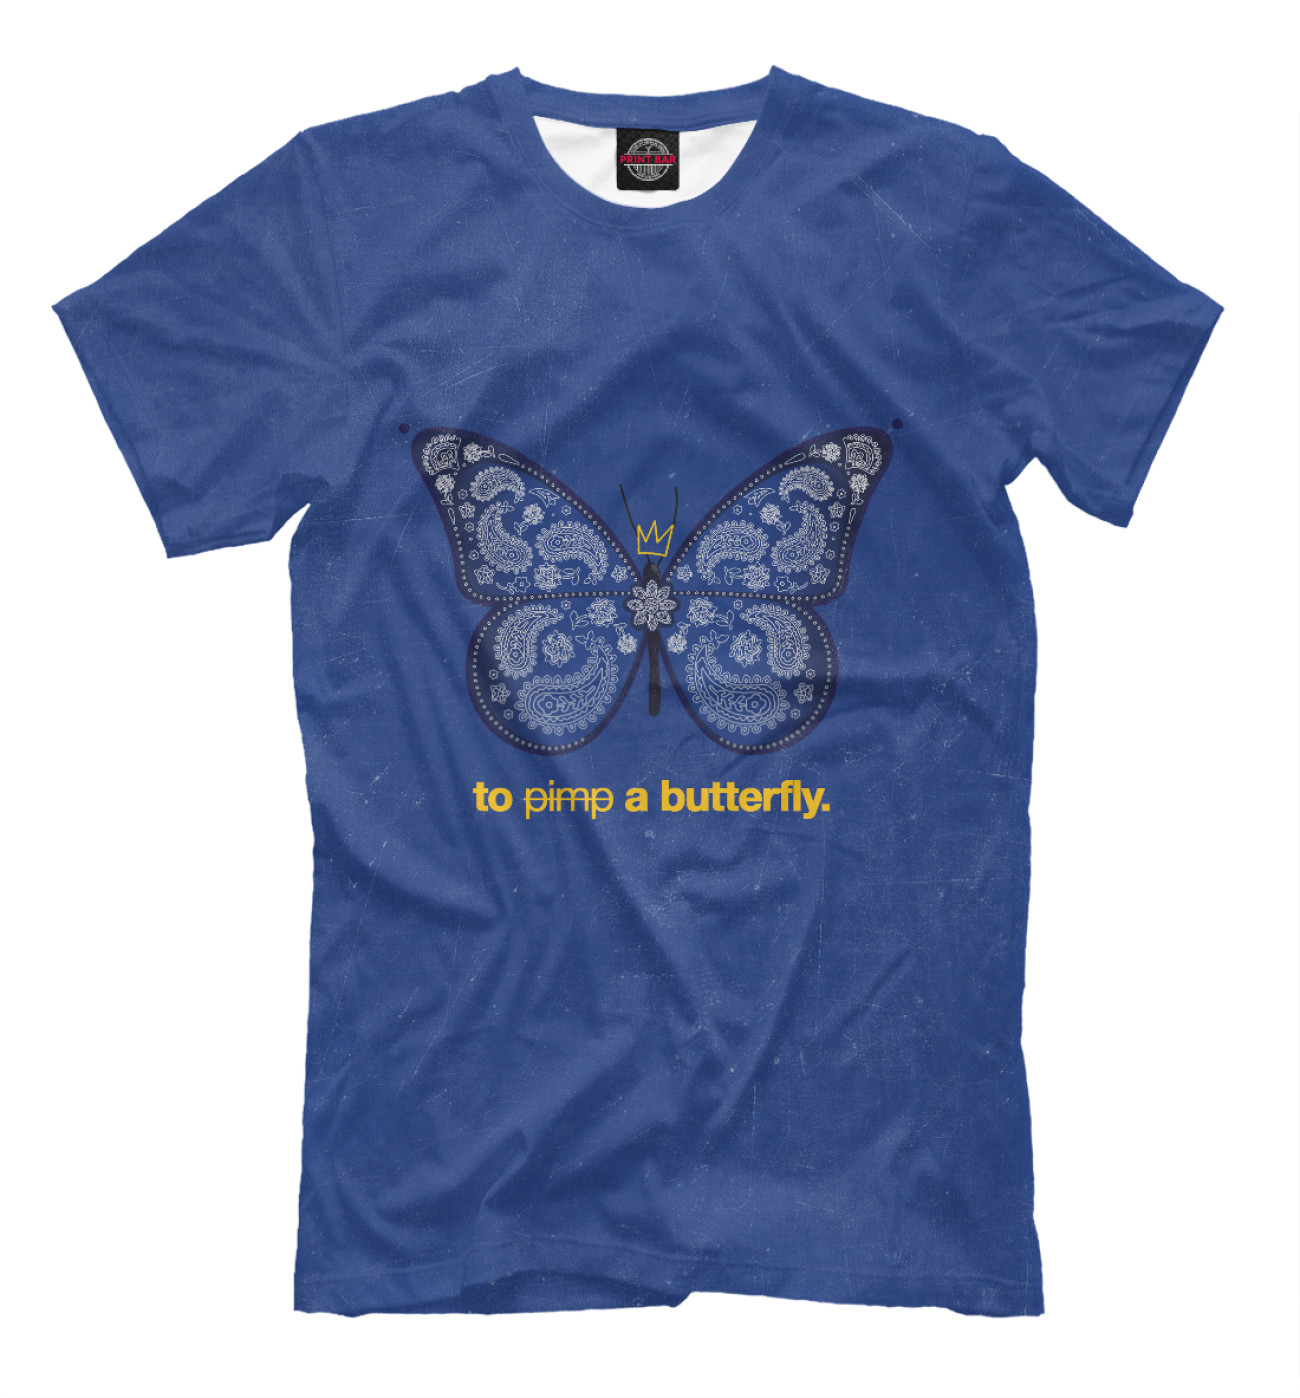 Мужская Футболка To Pimp a Butterfly, артикул: KLM-712872-fut-2